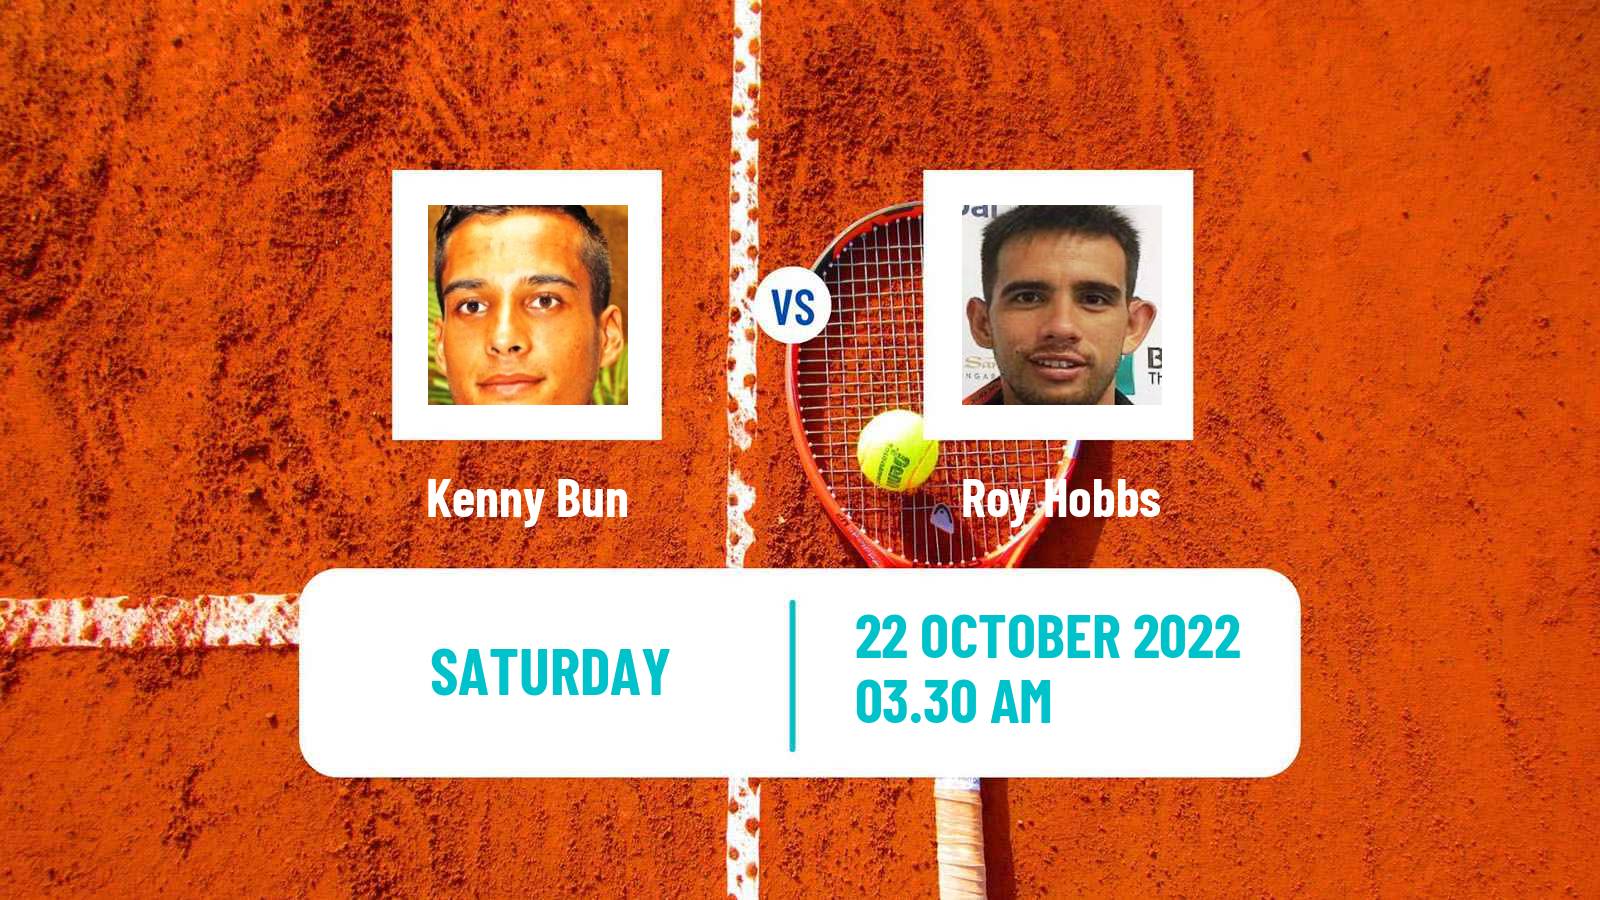 Tennis Davis Cup Group IV Kenny Bun - Roy Hobbs